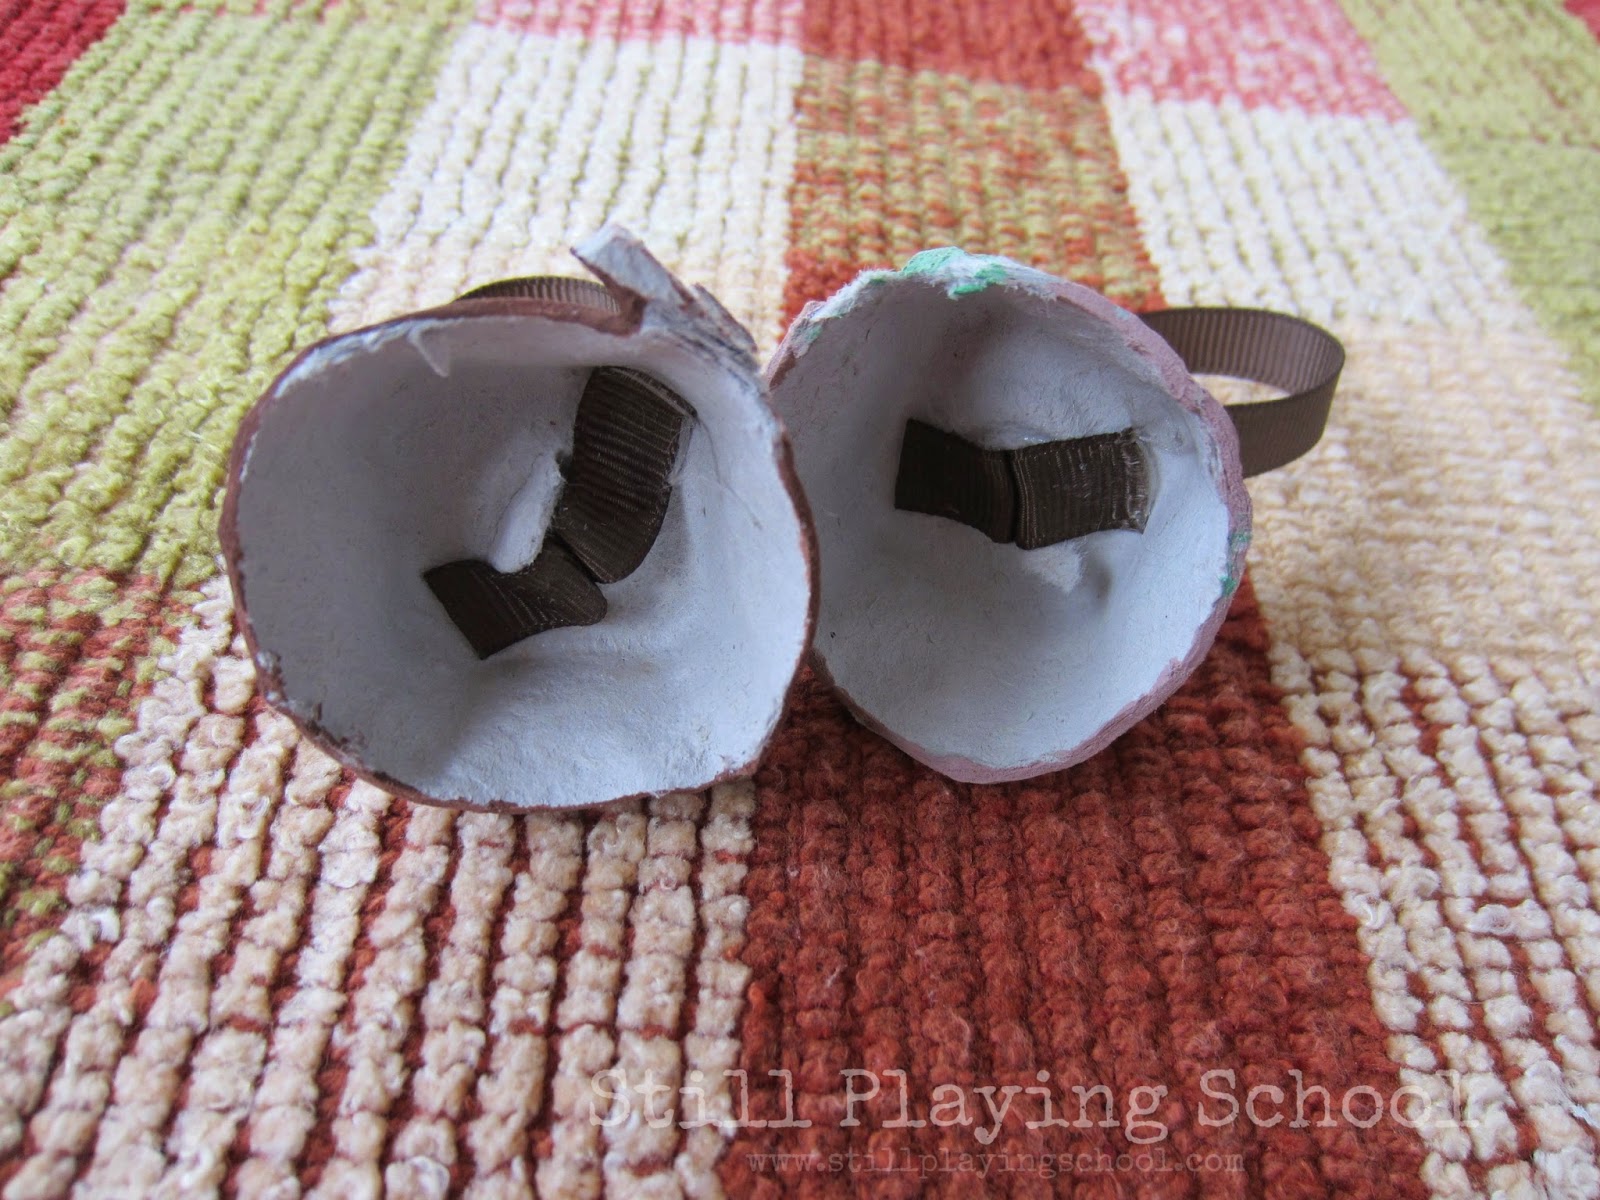 Recycled Egg Carton Acorn Ornaments | Still Playing School